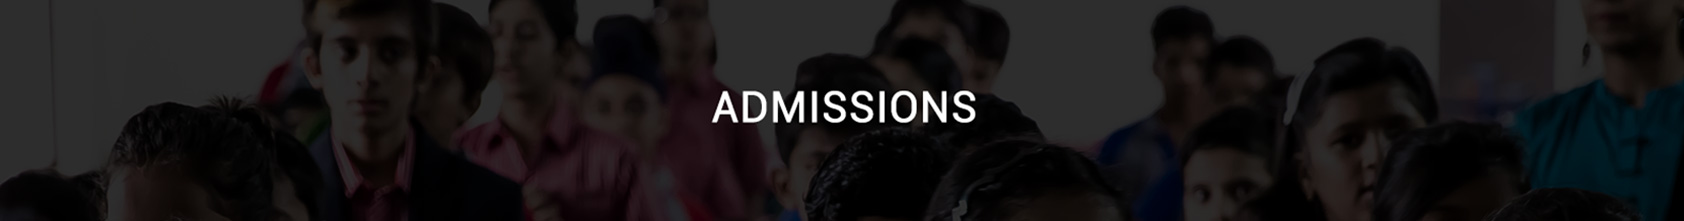 Admissions - Ryan Global Schools